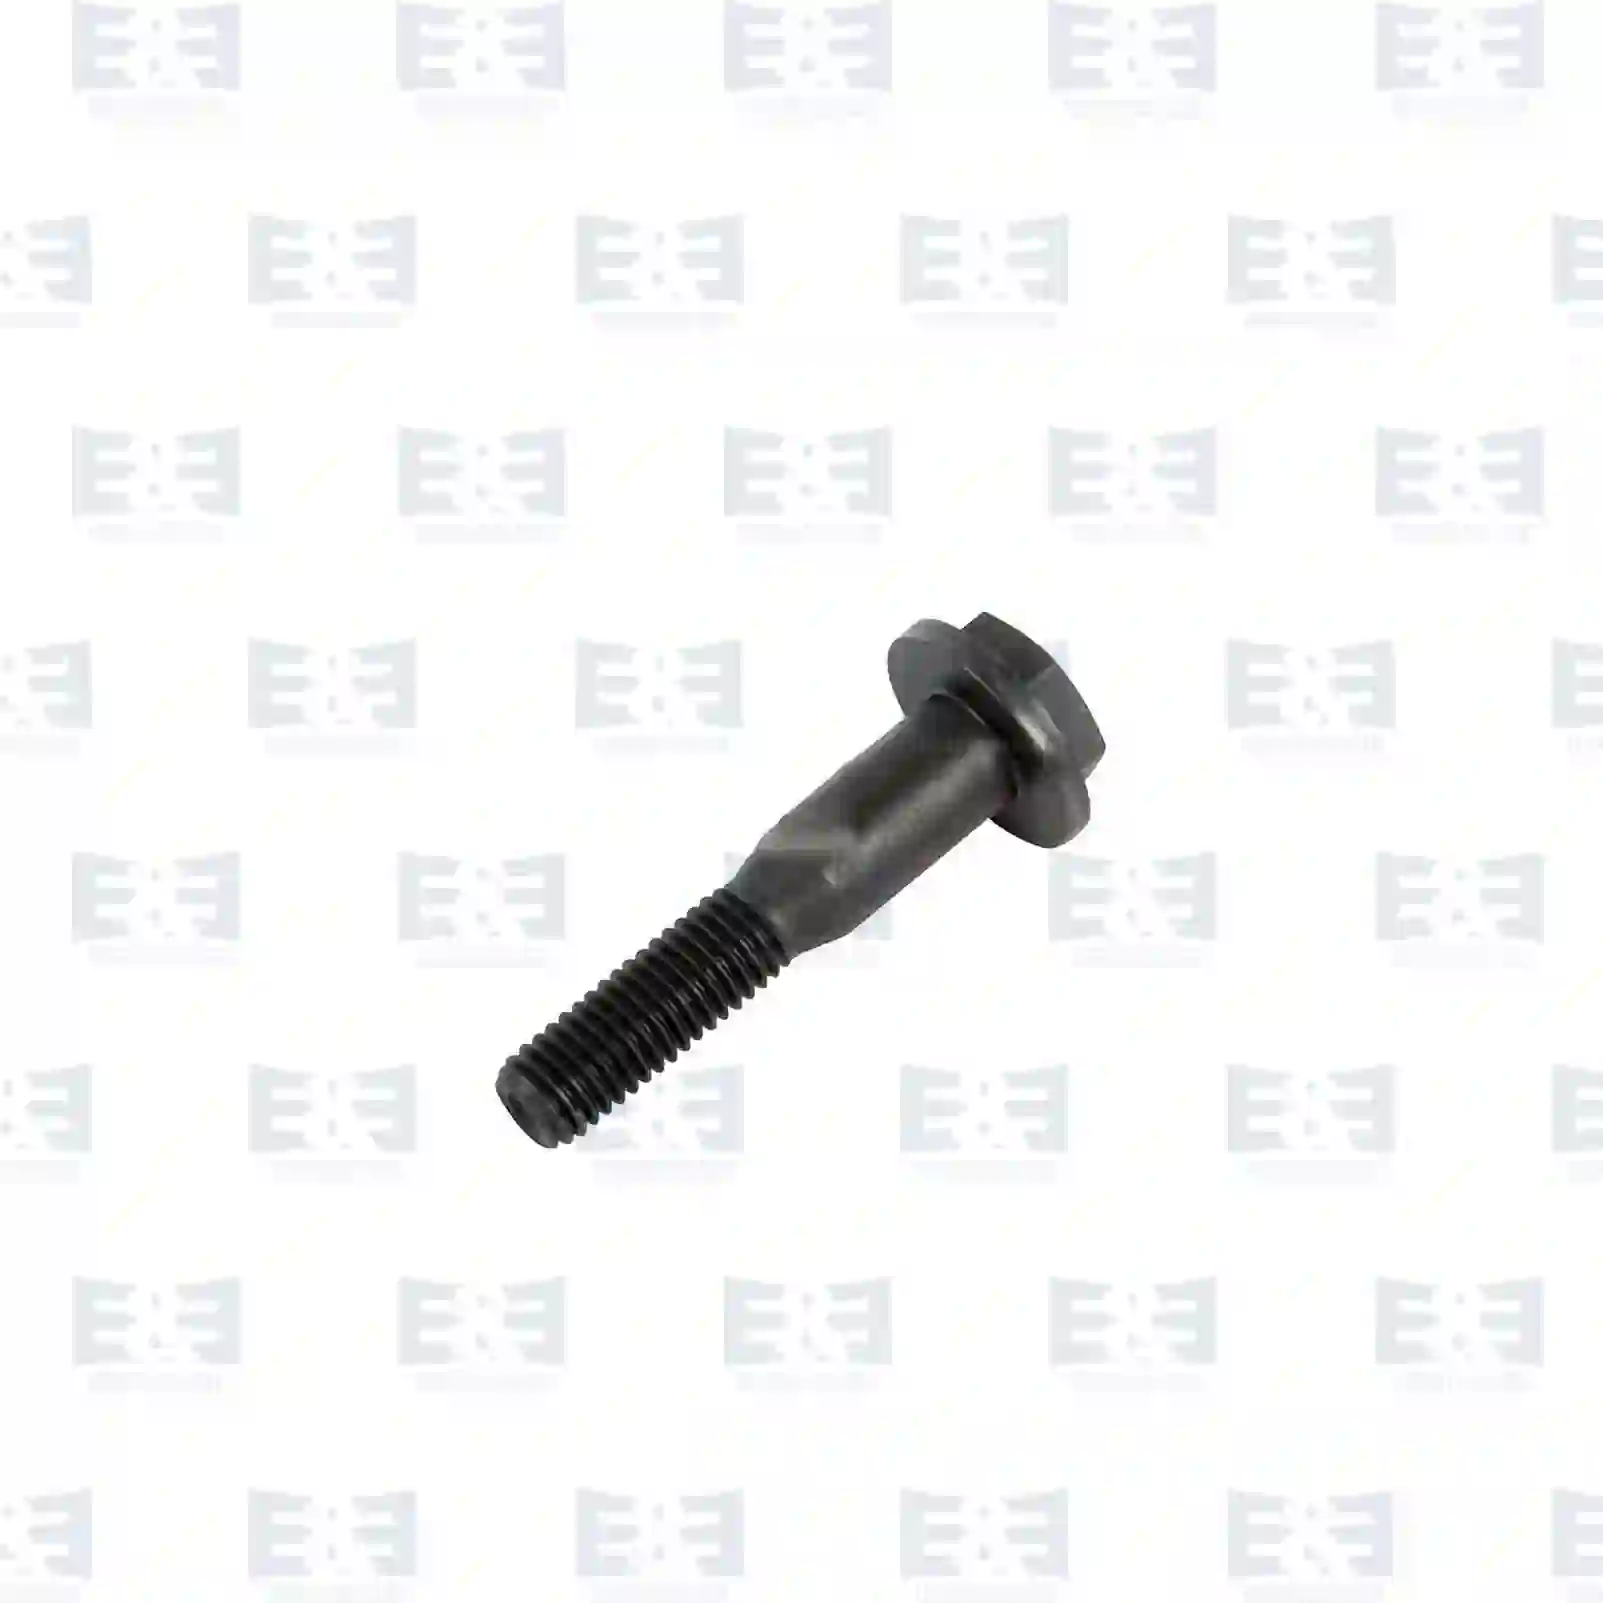  Union screw || E&E Truck Spare Parts | Truck Spare Parts, Auotomotive Spare Parts